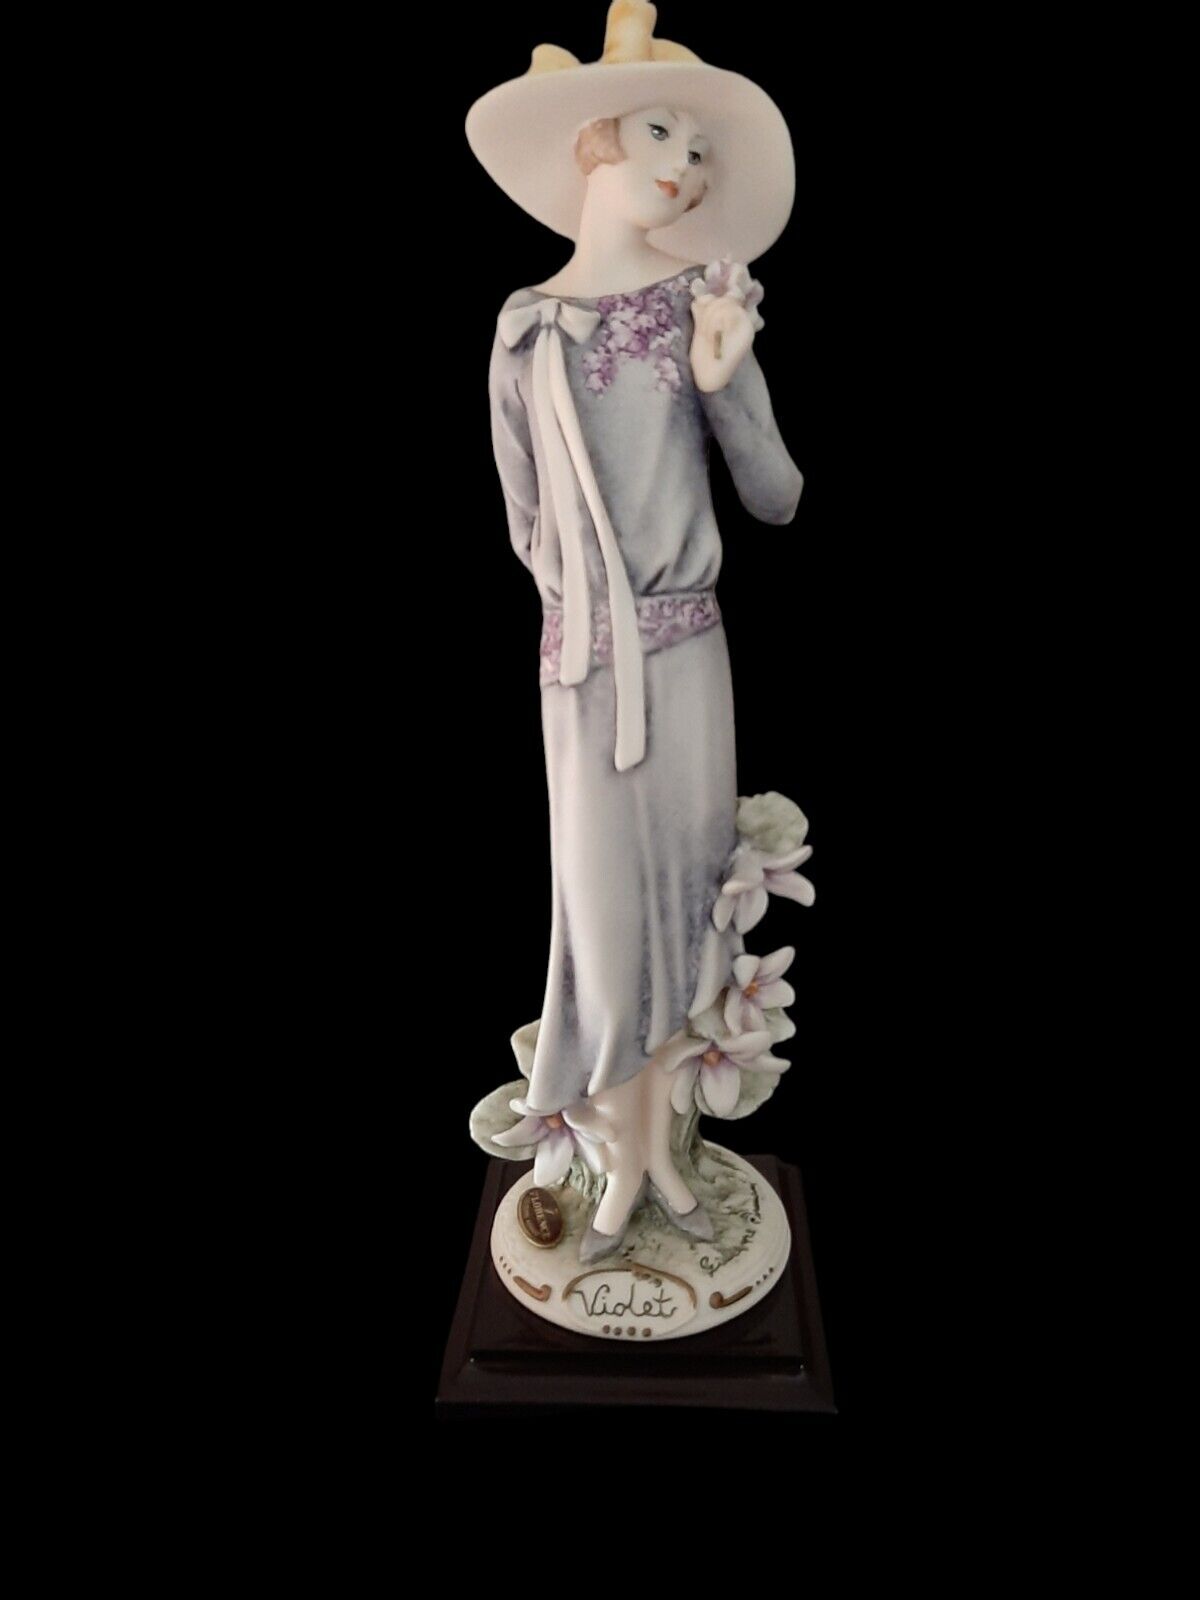   Guiseppe Armani  Figurine. Violet 1737C No Box.